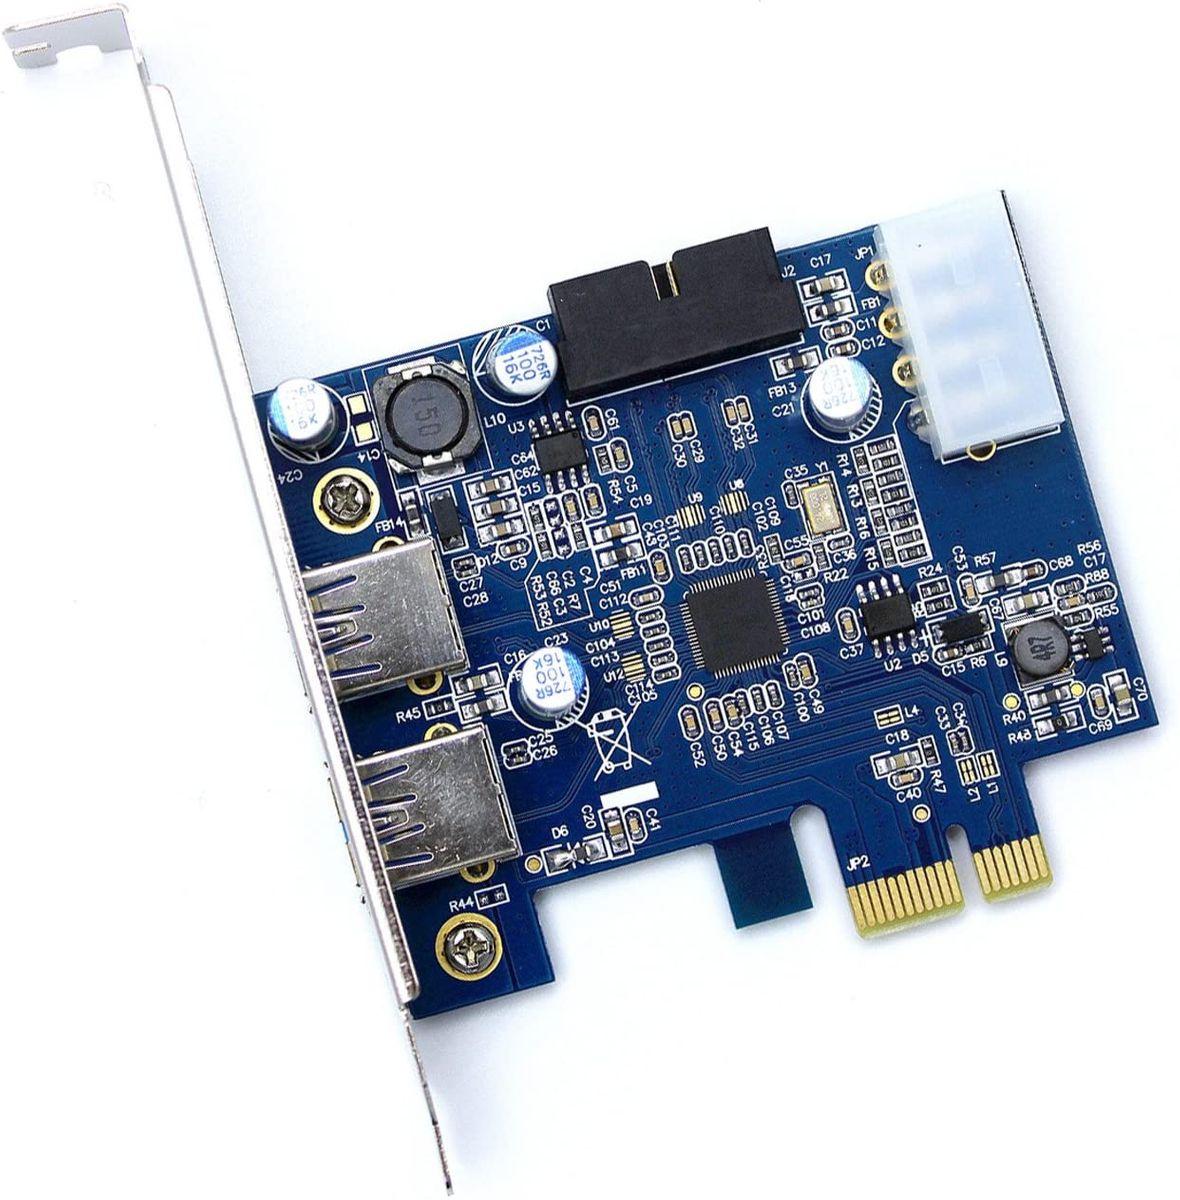 Optiaml Shop 2 Port USB 3.0 PCI Express Card, Mini PCI-E USB 3.0 Hub Controller Adapter